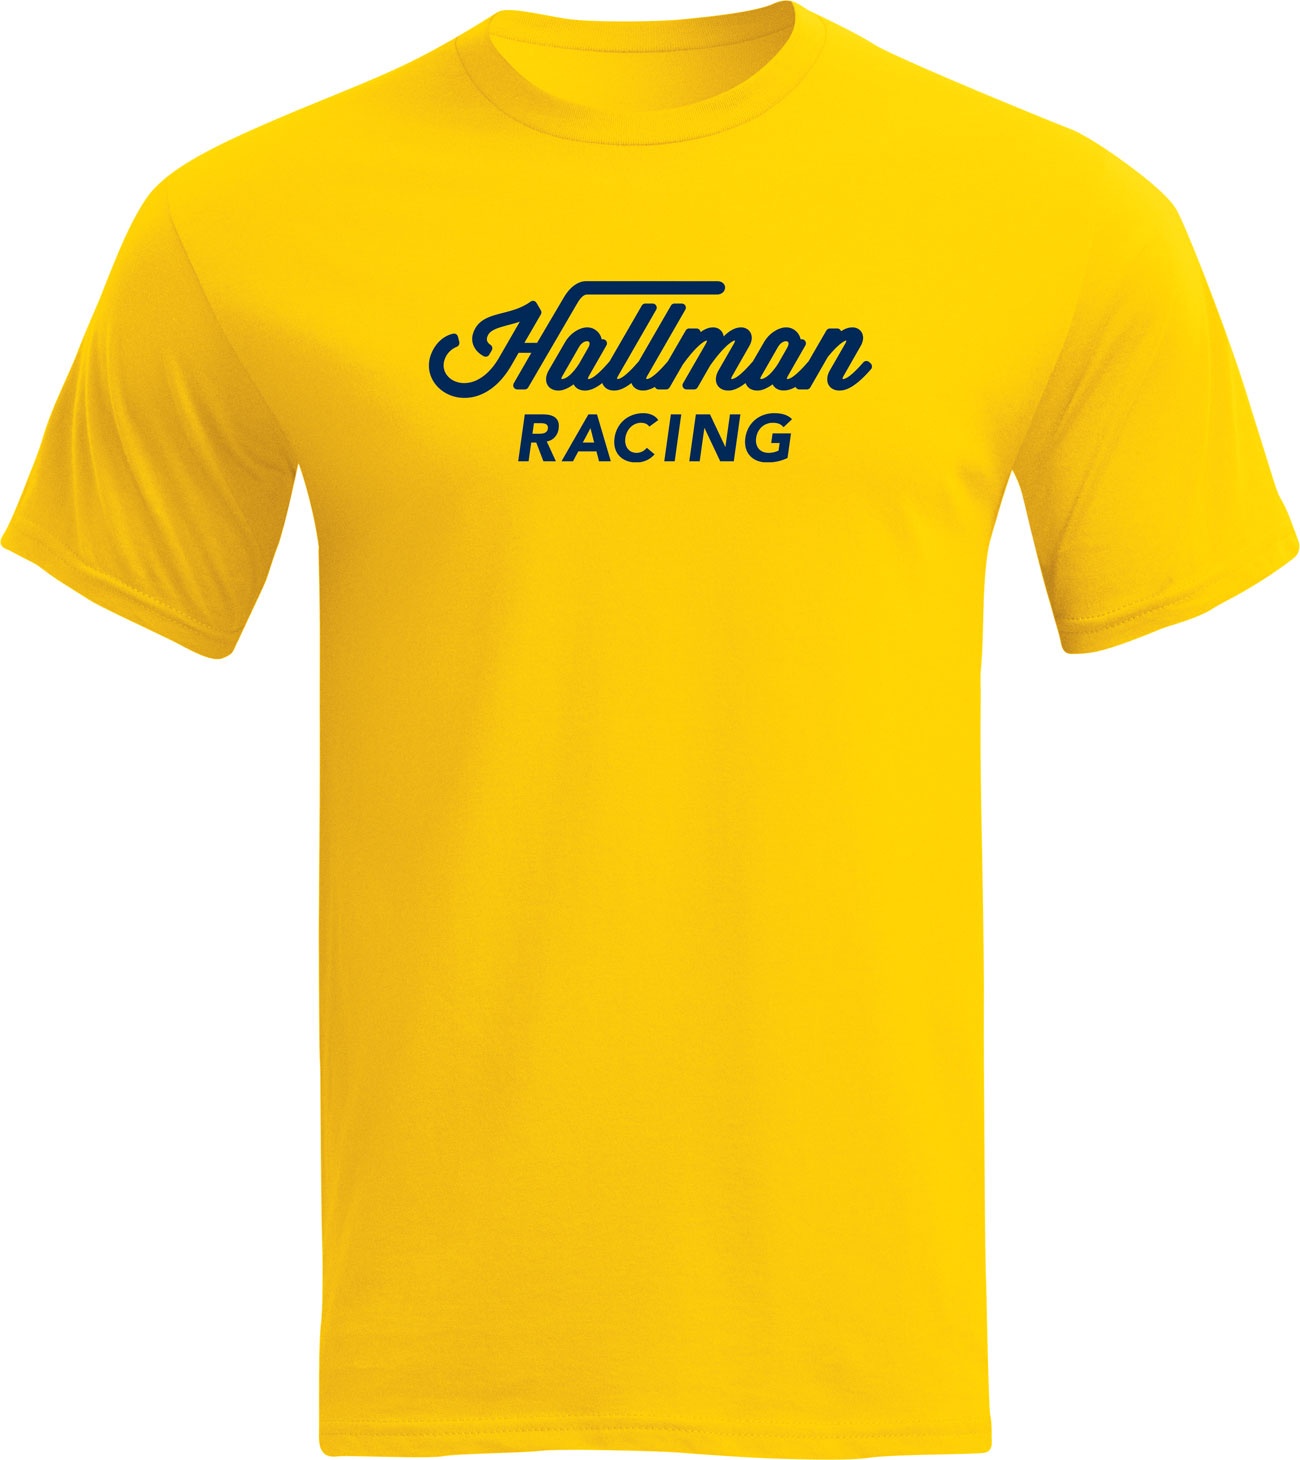 Thor Hallman Heritage, t-shirt - Jaune - S